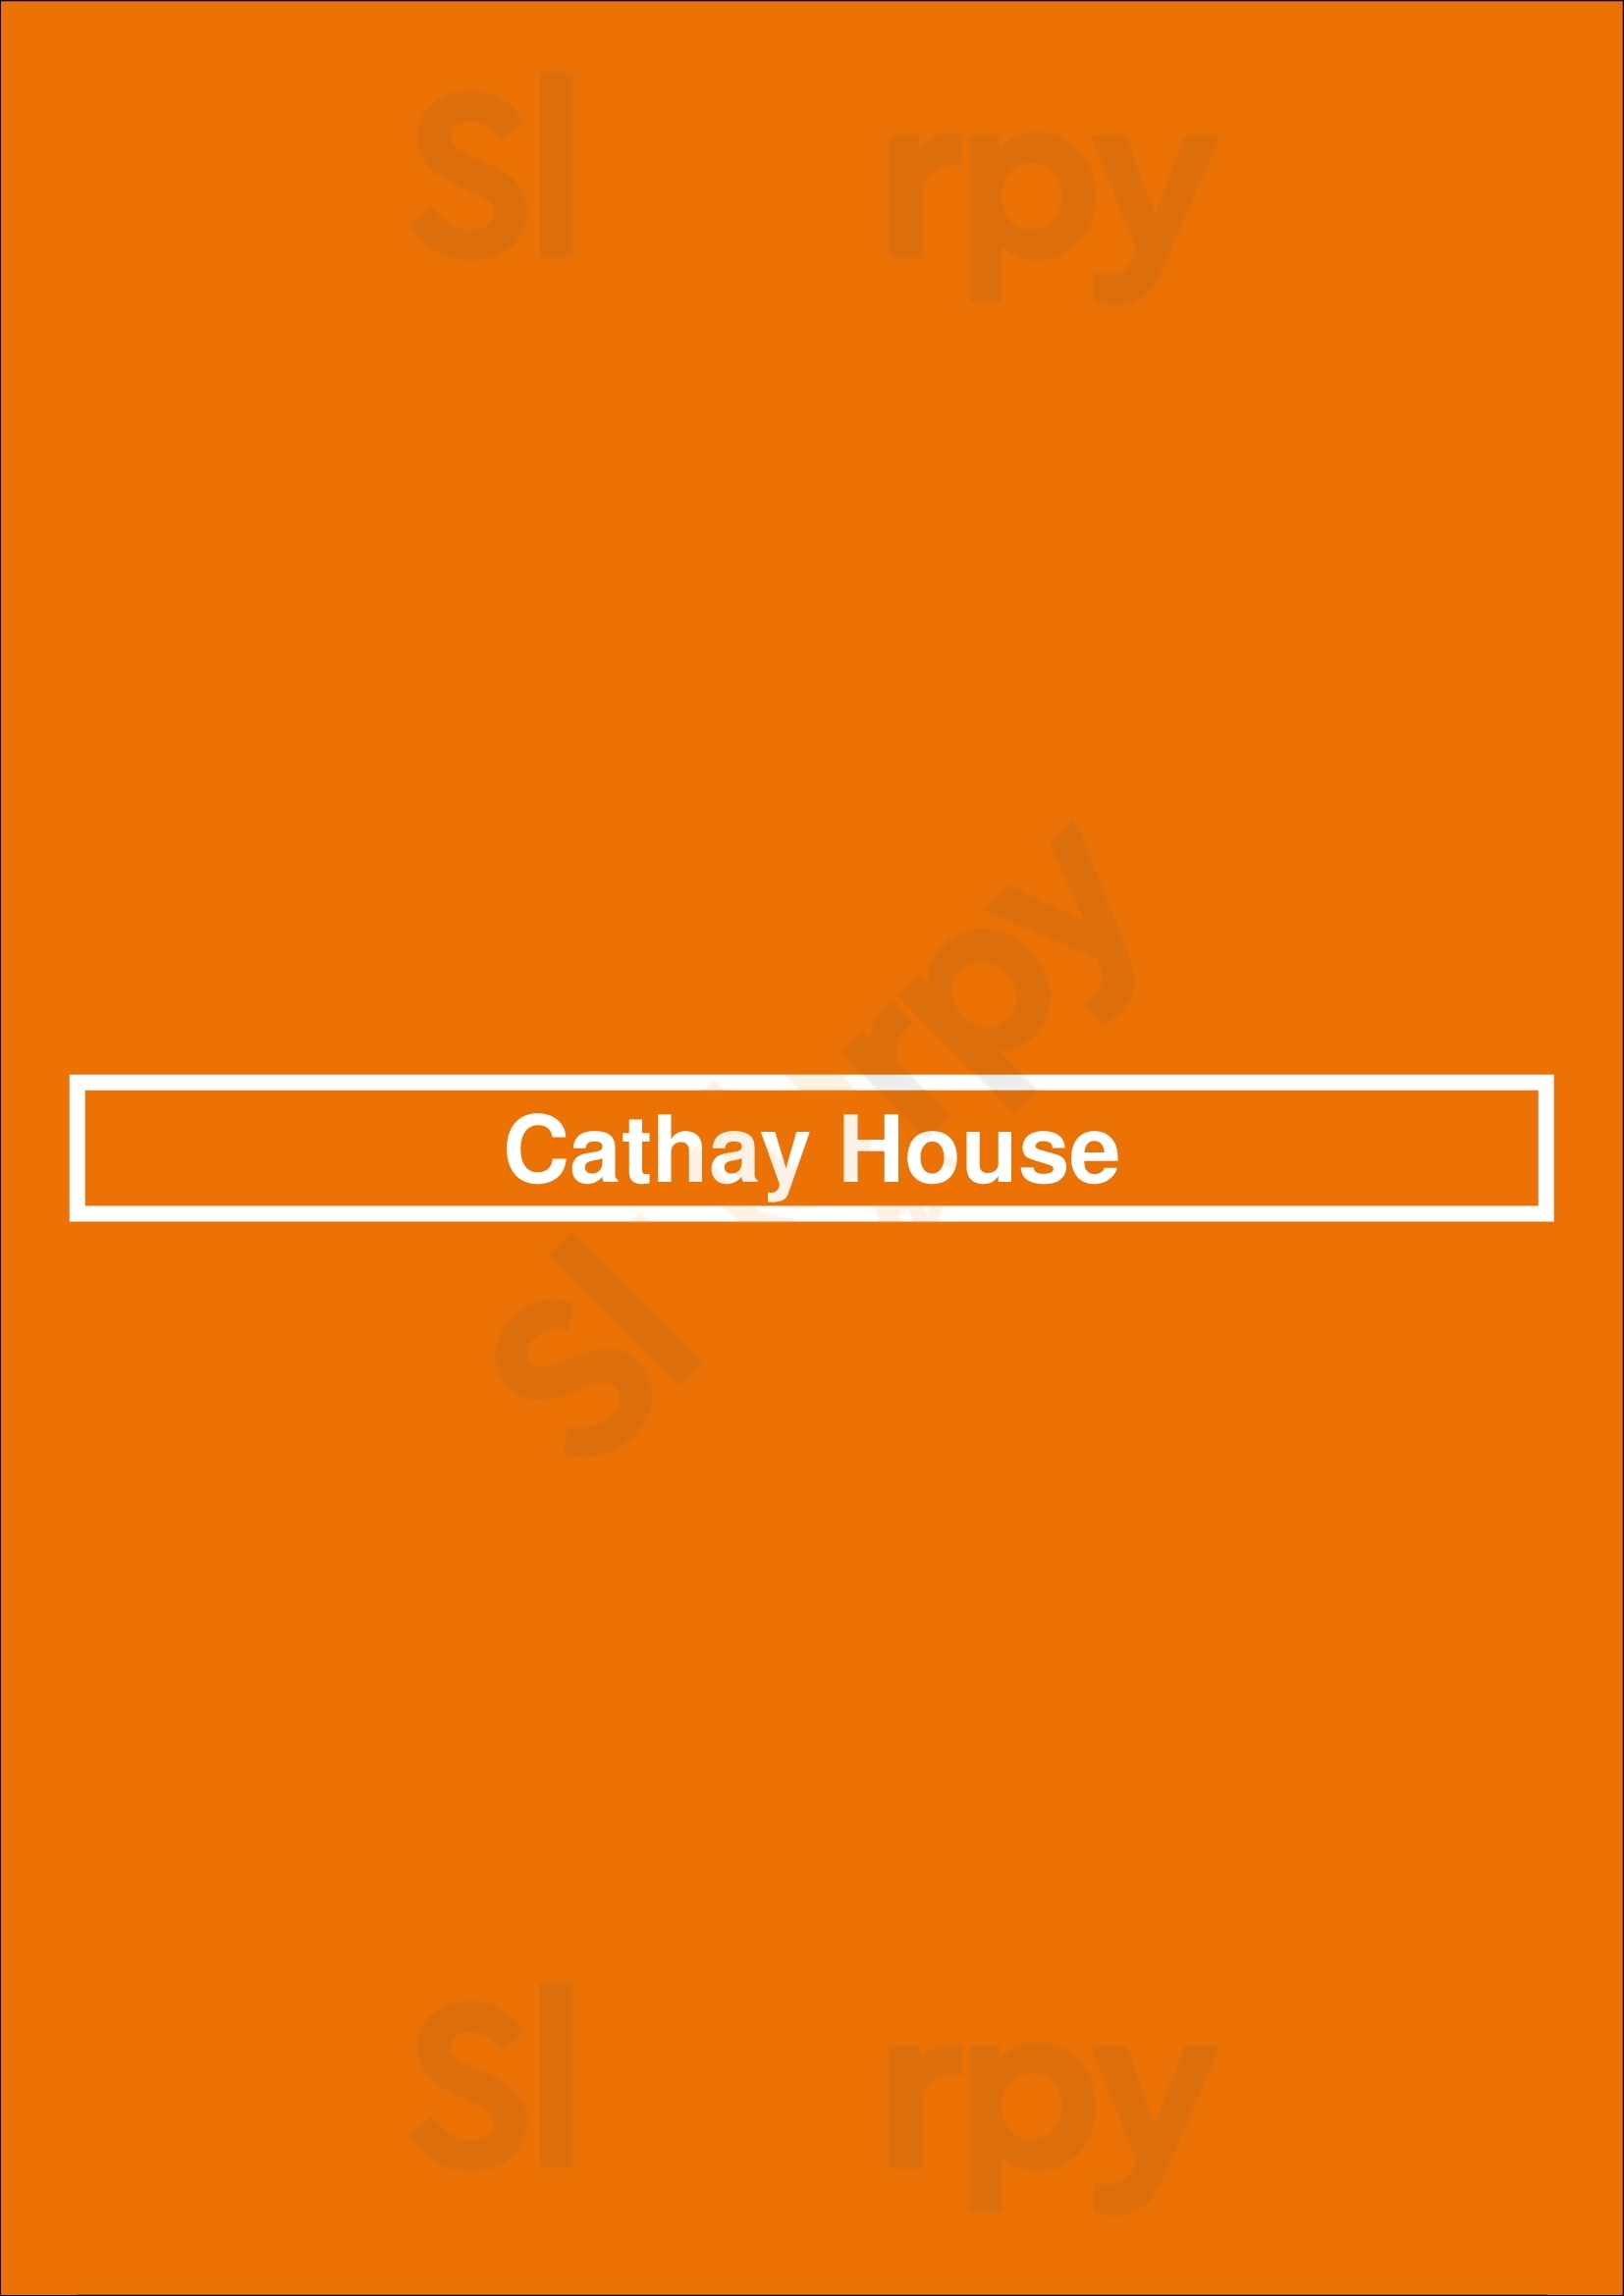 Cathay House Winnipeg Menu - 1